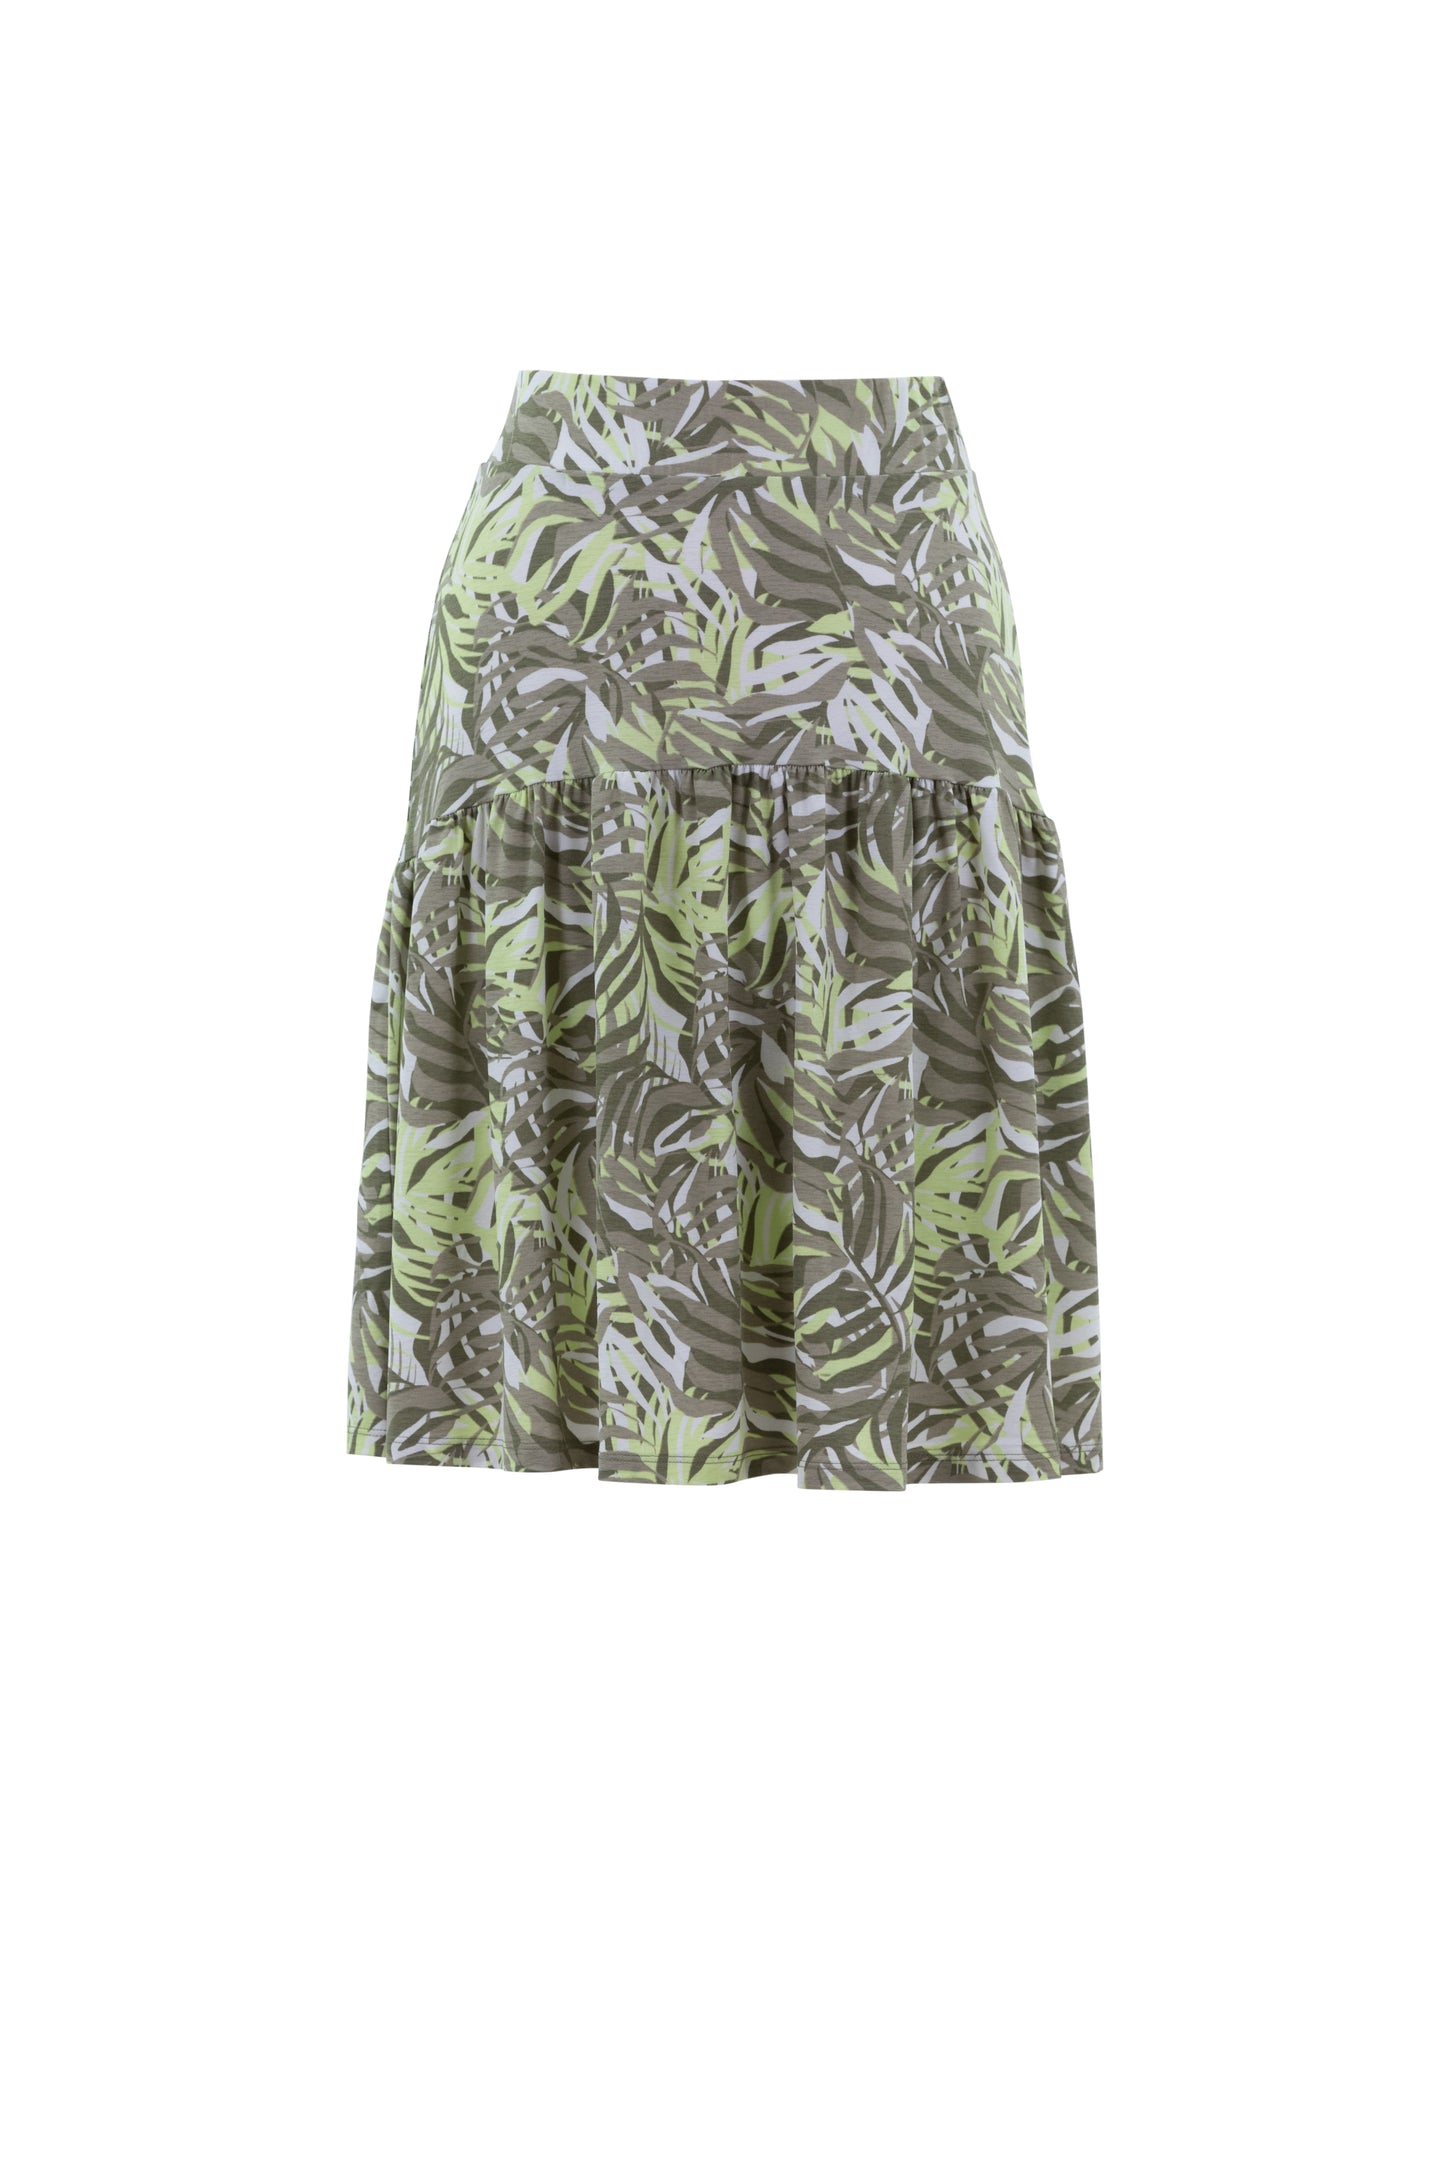 Leaf Print Skirt in Olive